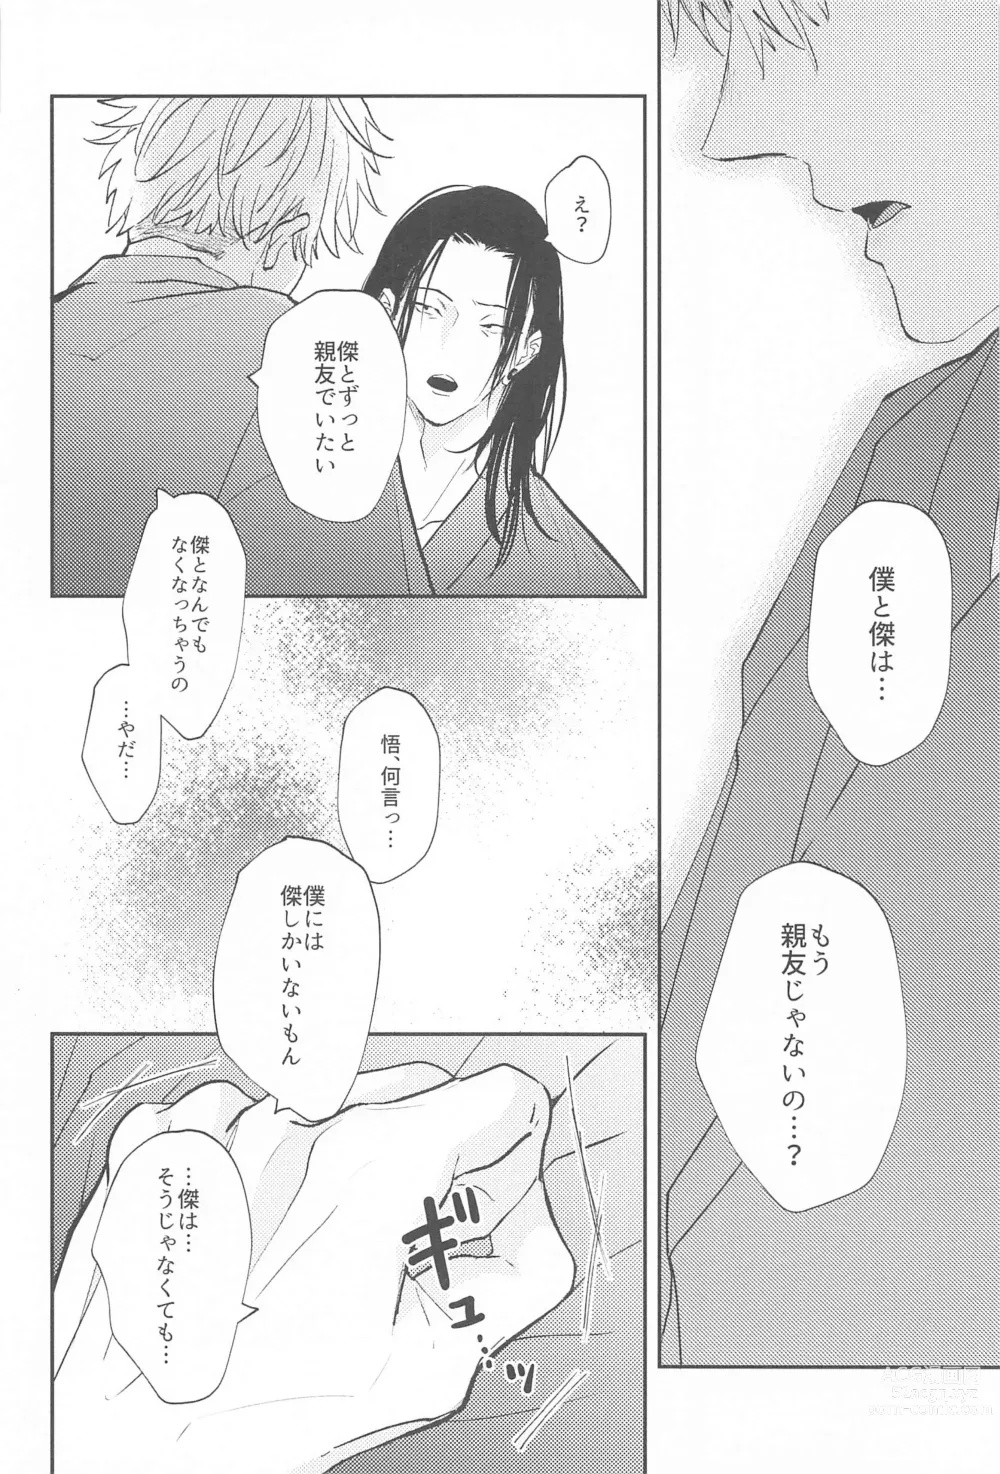 Page 27 of doujinshi Kojirase Blue to Koi Wazurai 2